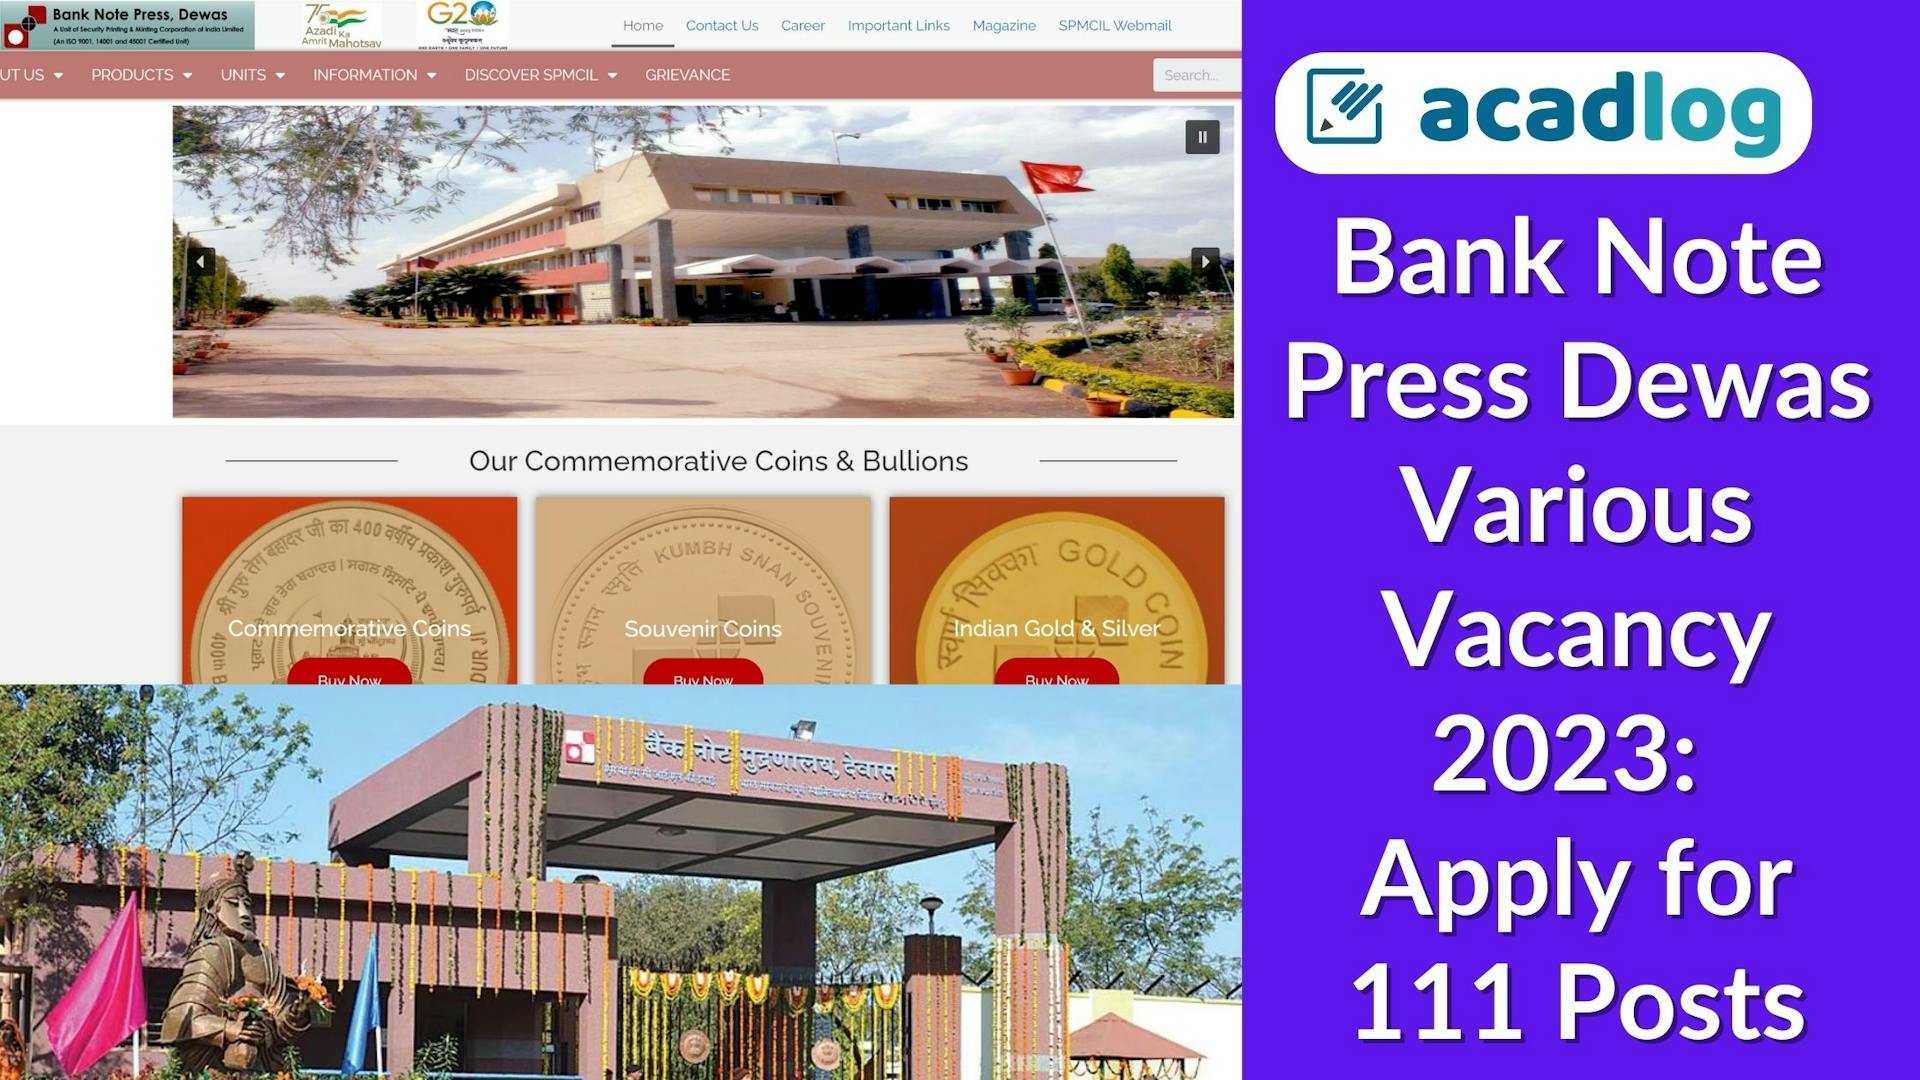 Bank Note Press Dewas Various Vacancy 2023: Apply for 111 Posts